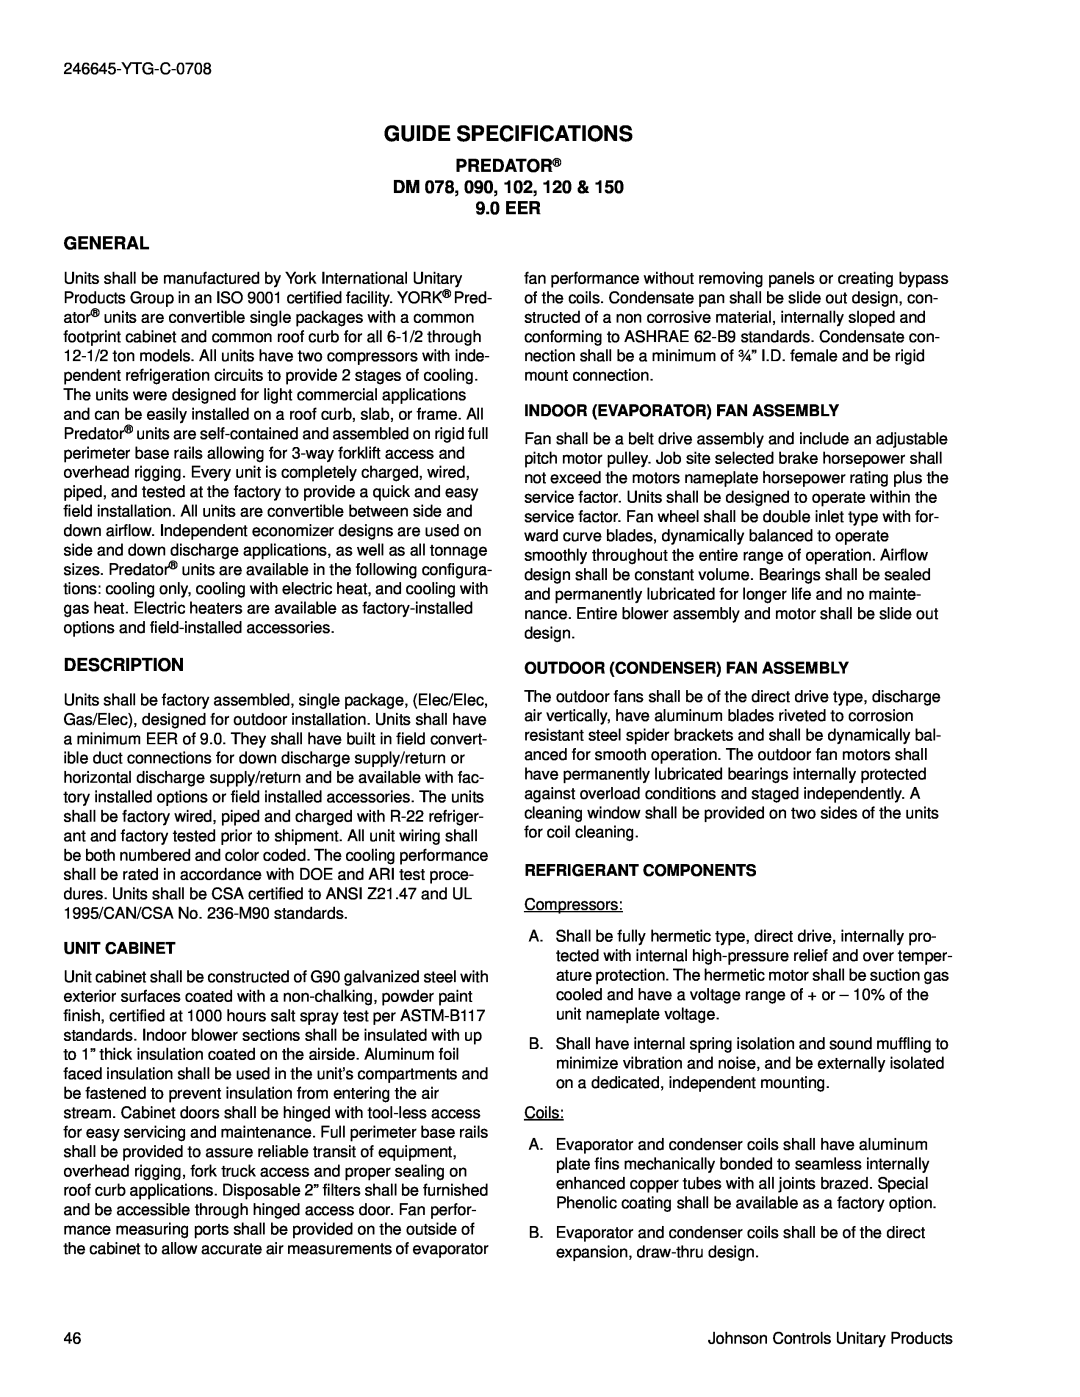 York manual Guide Specifications, PREDATOR DM 078, 090, 102, 120 & 9.0 EER GENERAL, Description 